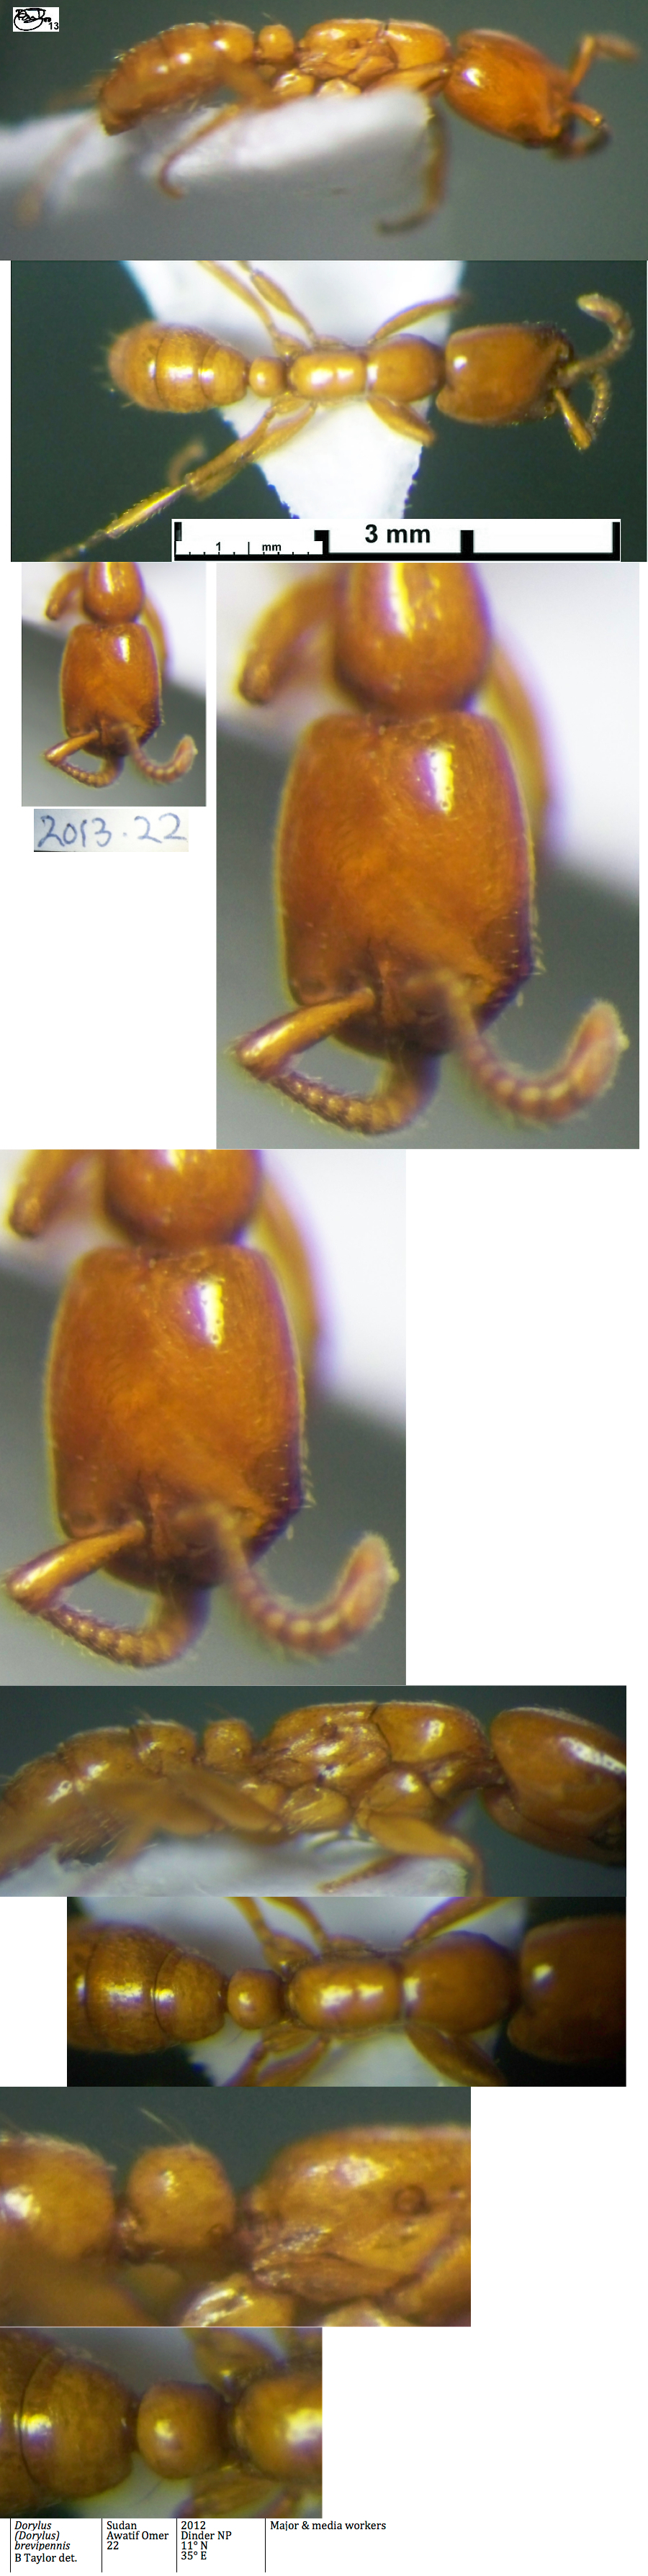 Dorylus brevipennis Minima